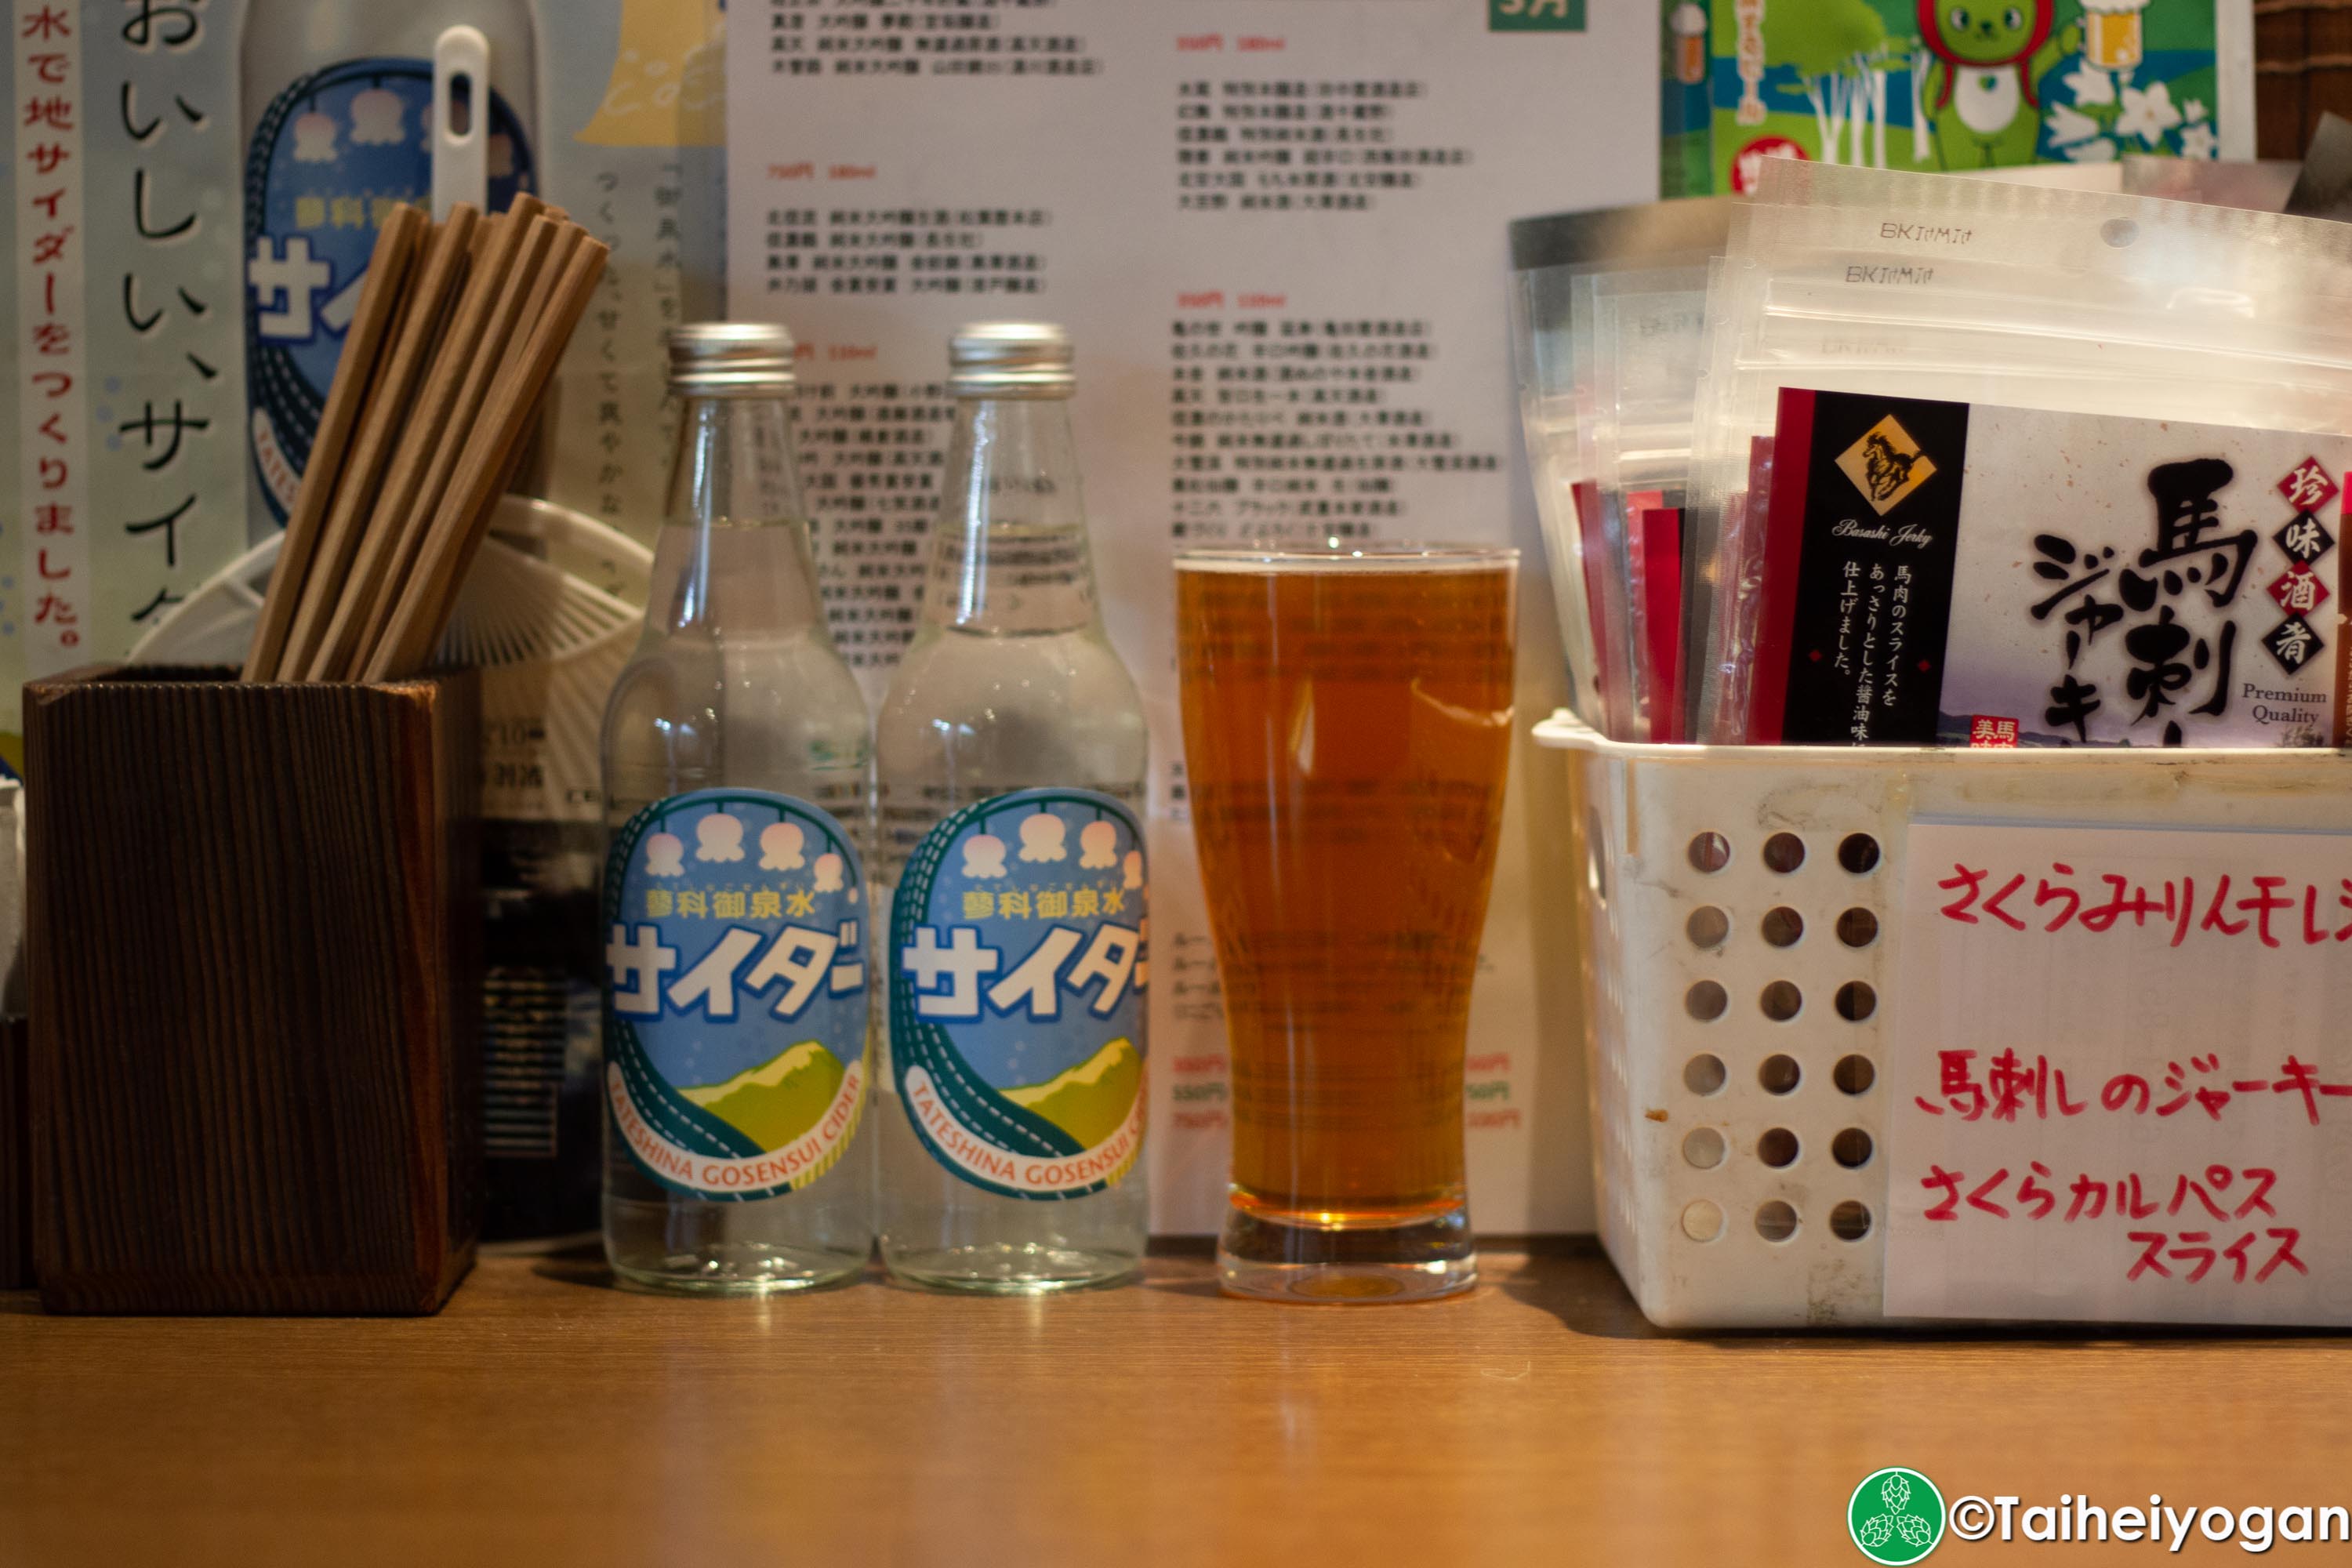 Shinshu Osake Mura - 信州お酒村 - Interior - Beer